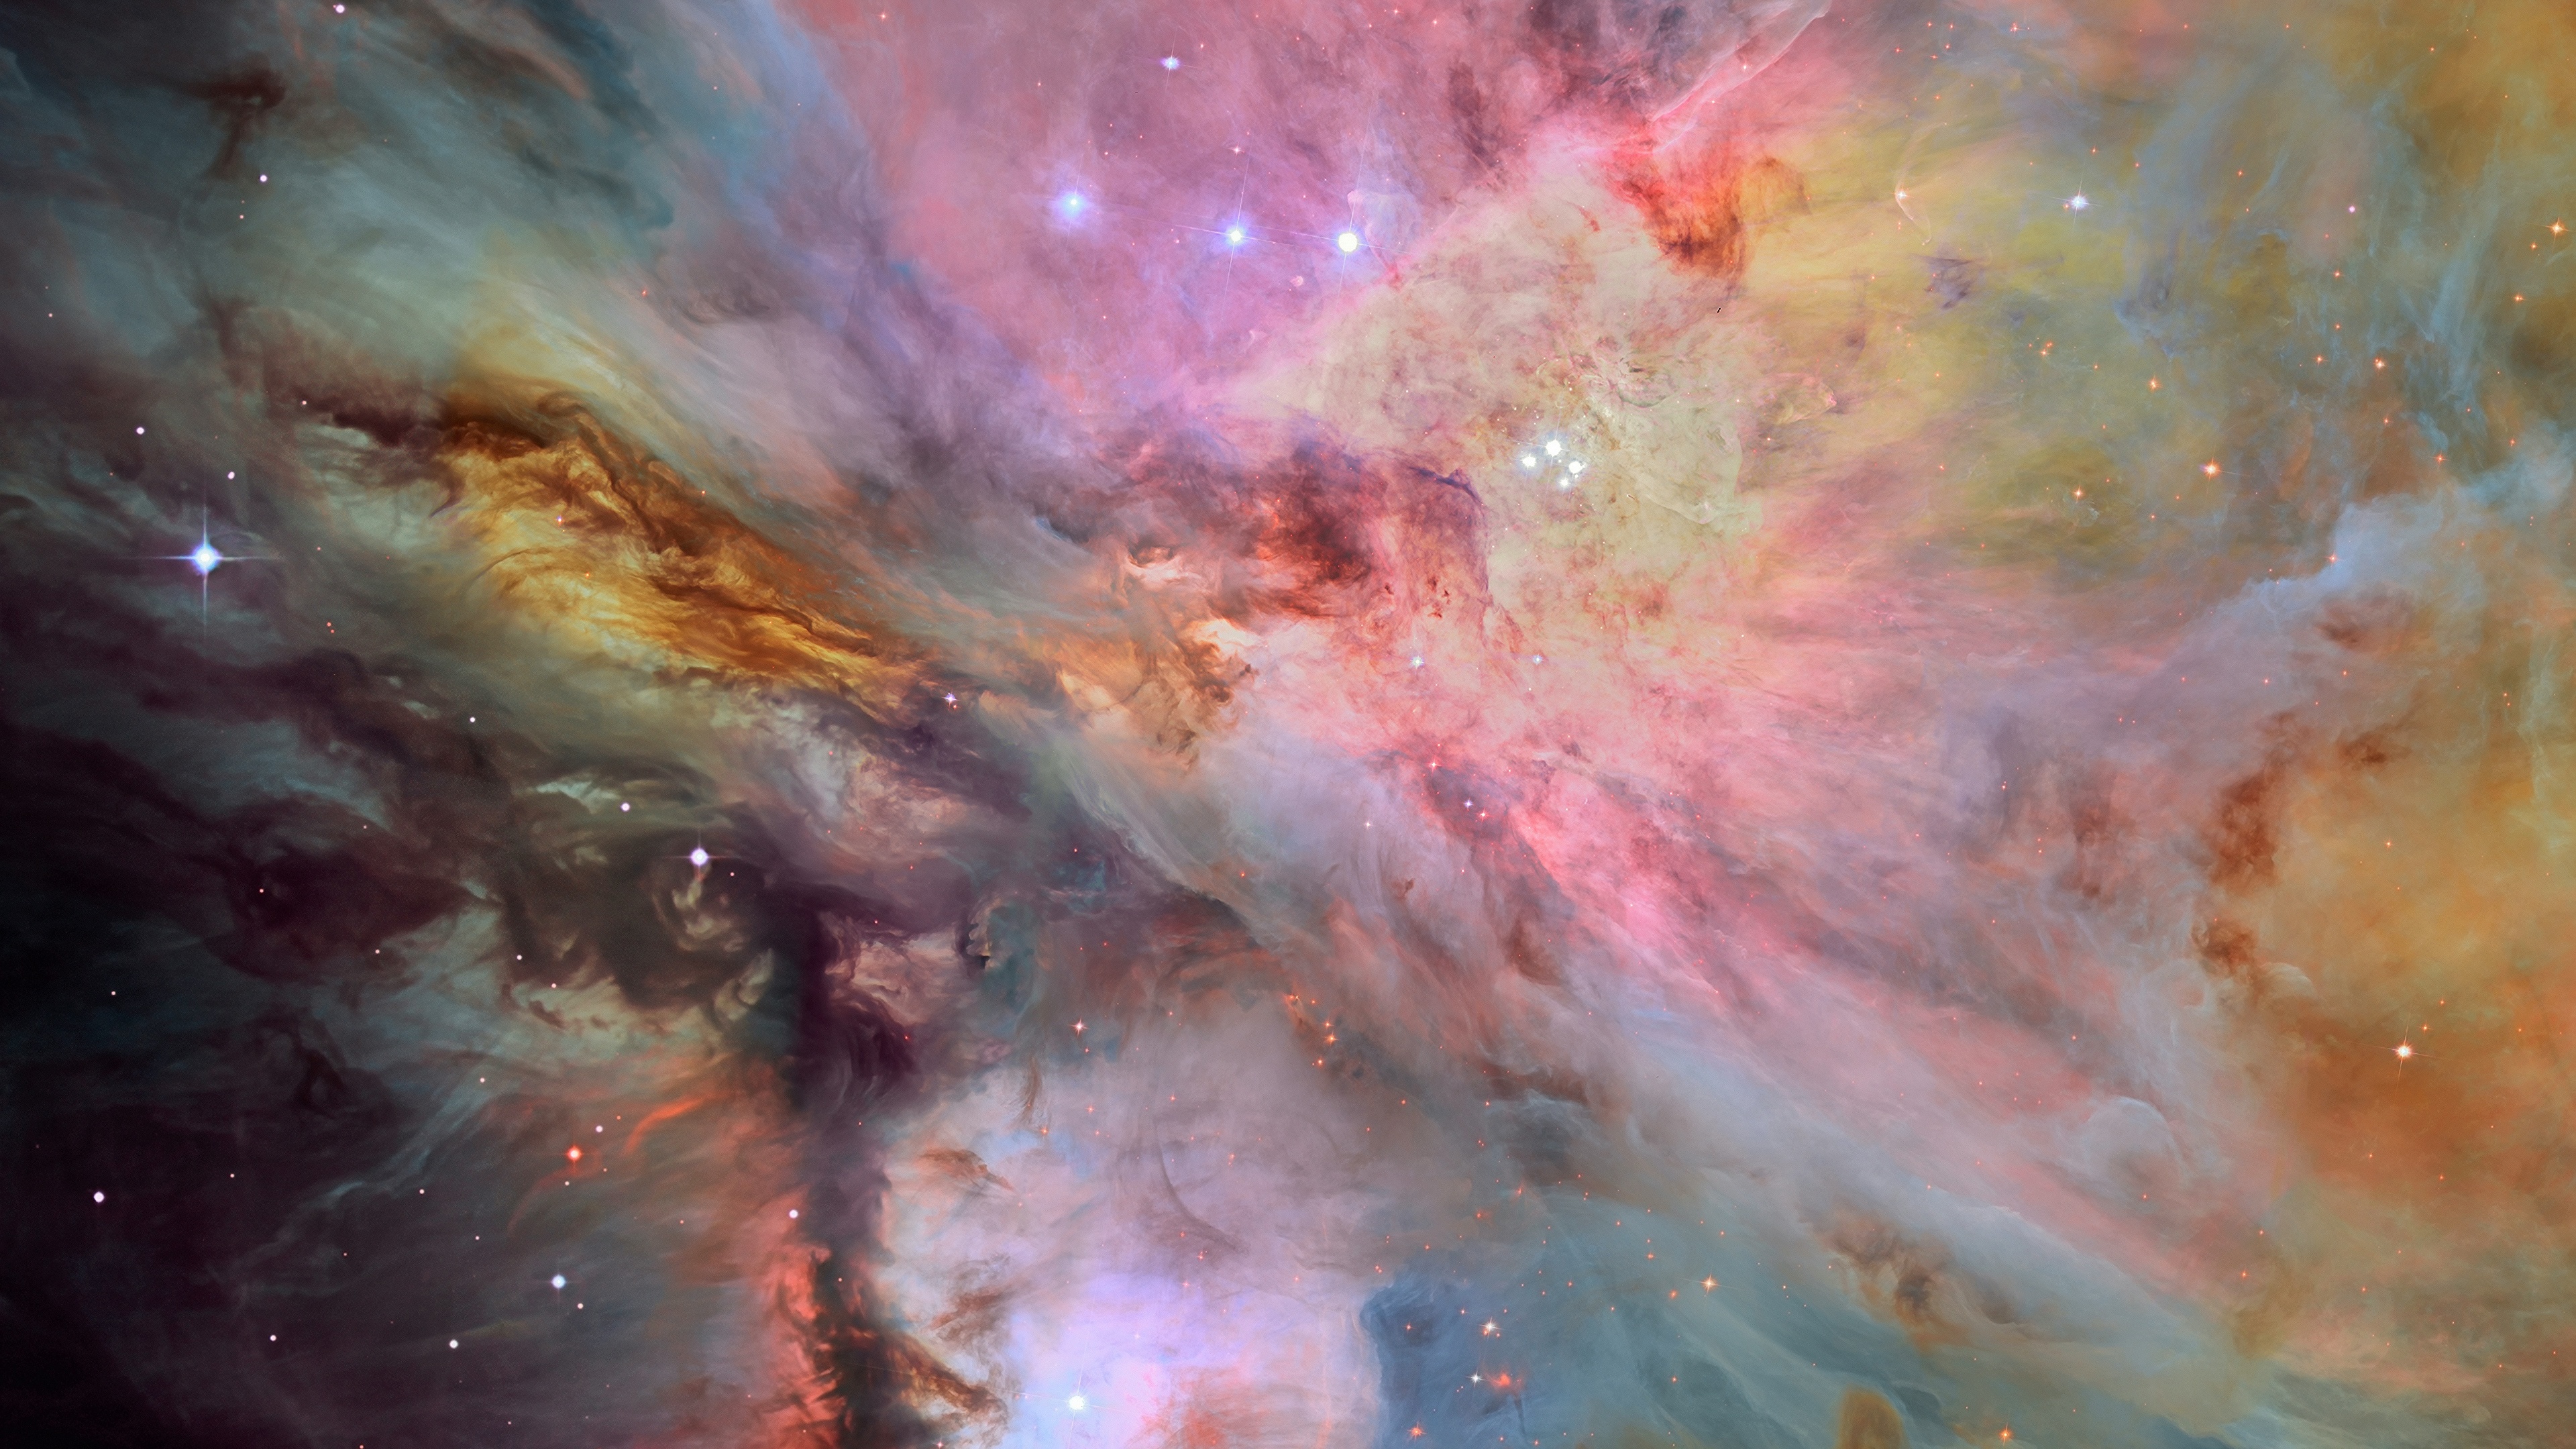 3840x2160、空間内の星雲、Orion Nebula Messier 42, M42、、宇宙空間、